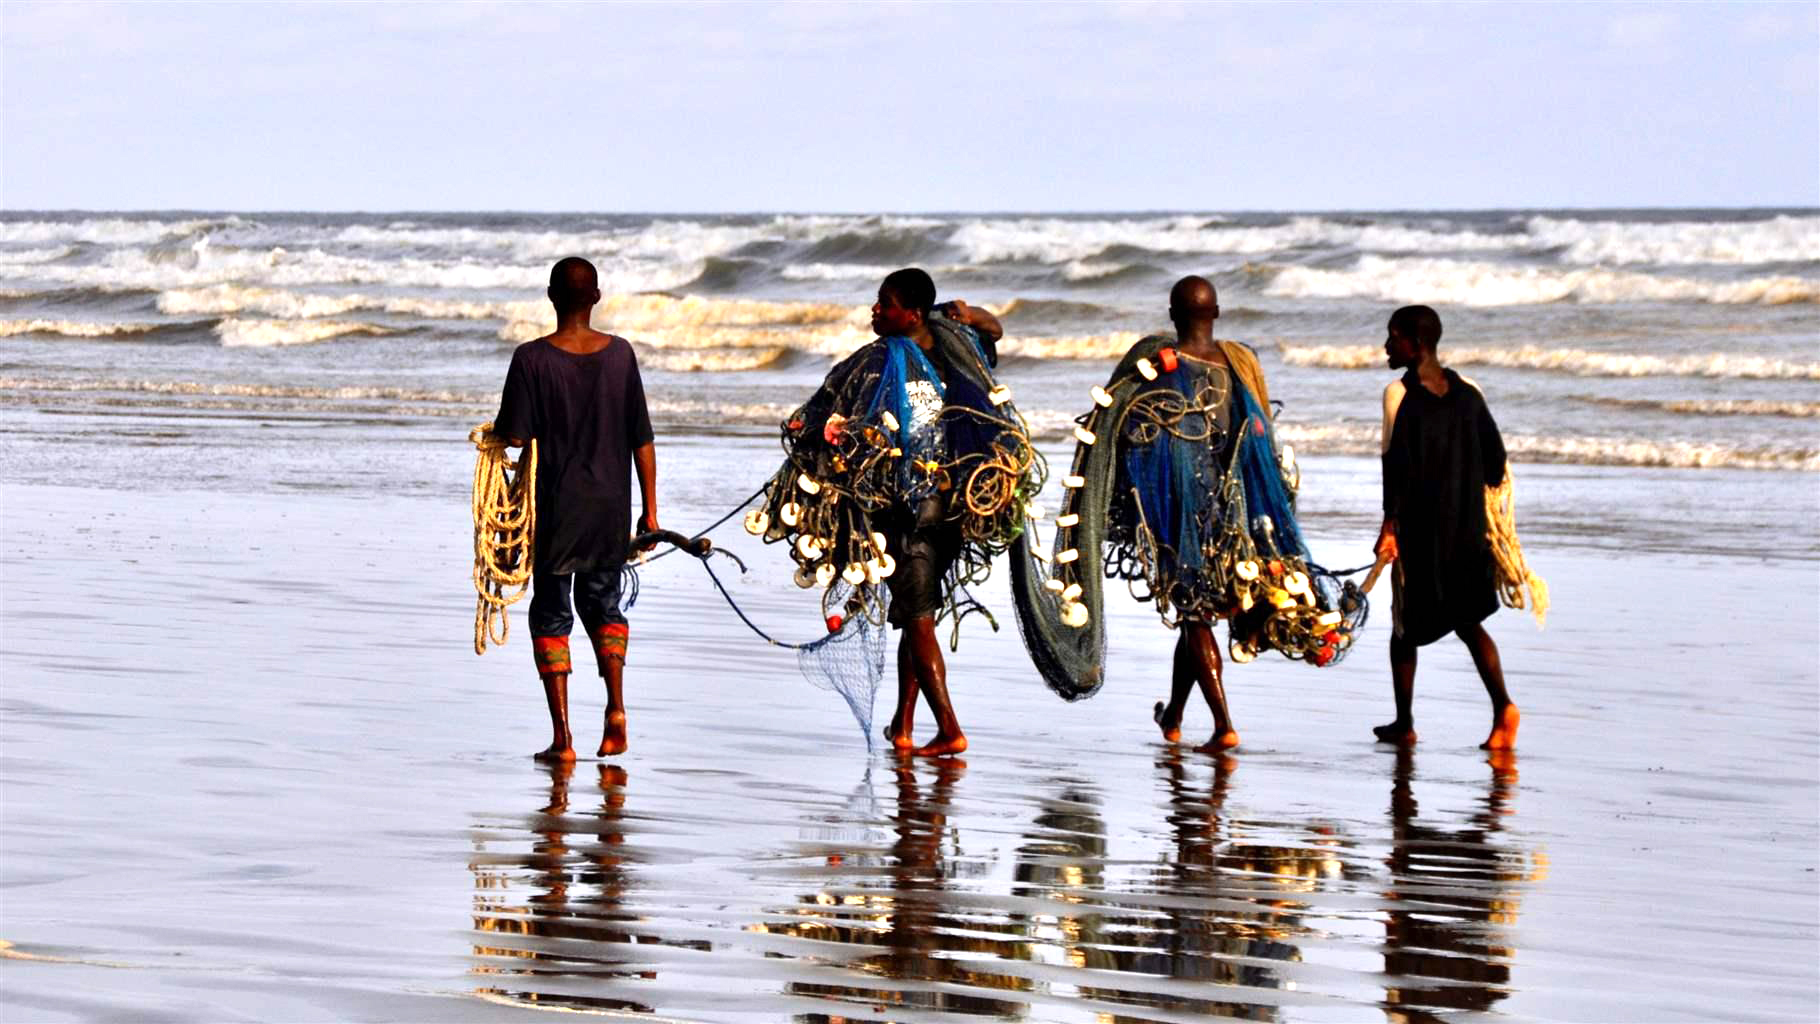 Need of Strengthening Fisheries Governance to Prevent IUU Fishing in Bangladesh